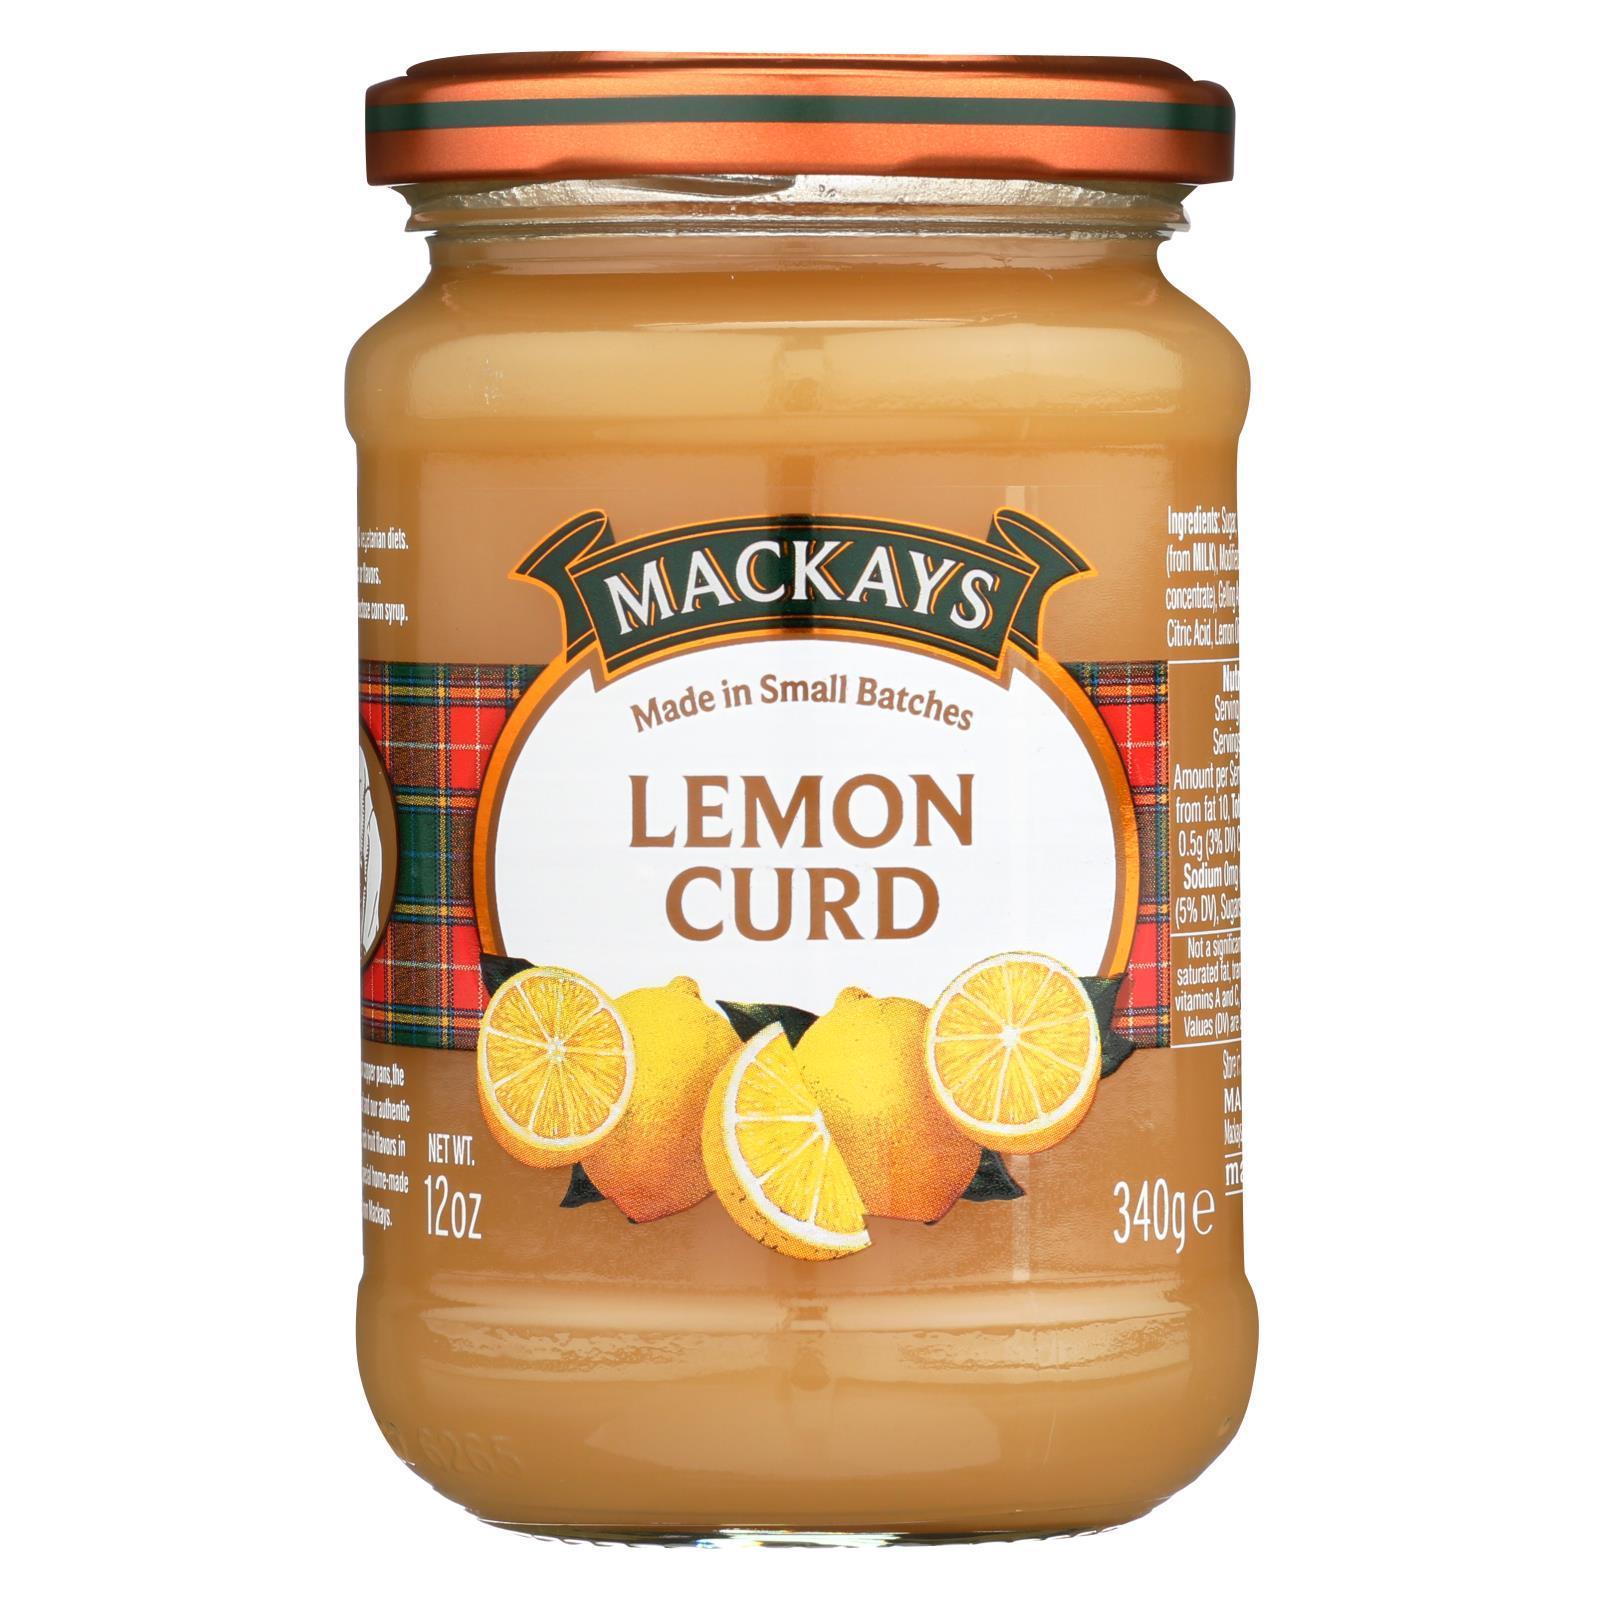 Mackay's Scottish Lemon Curd